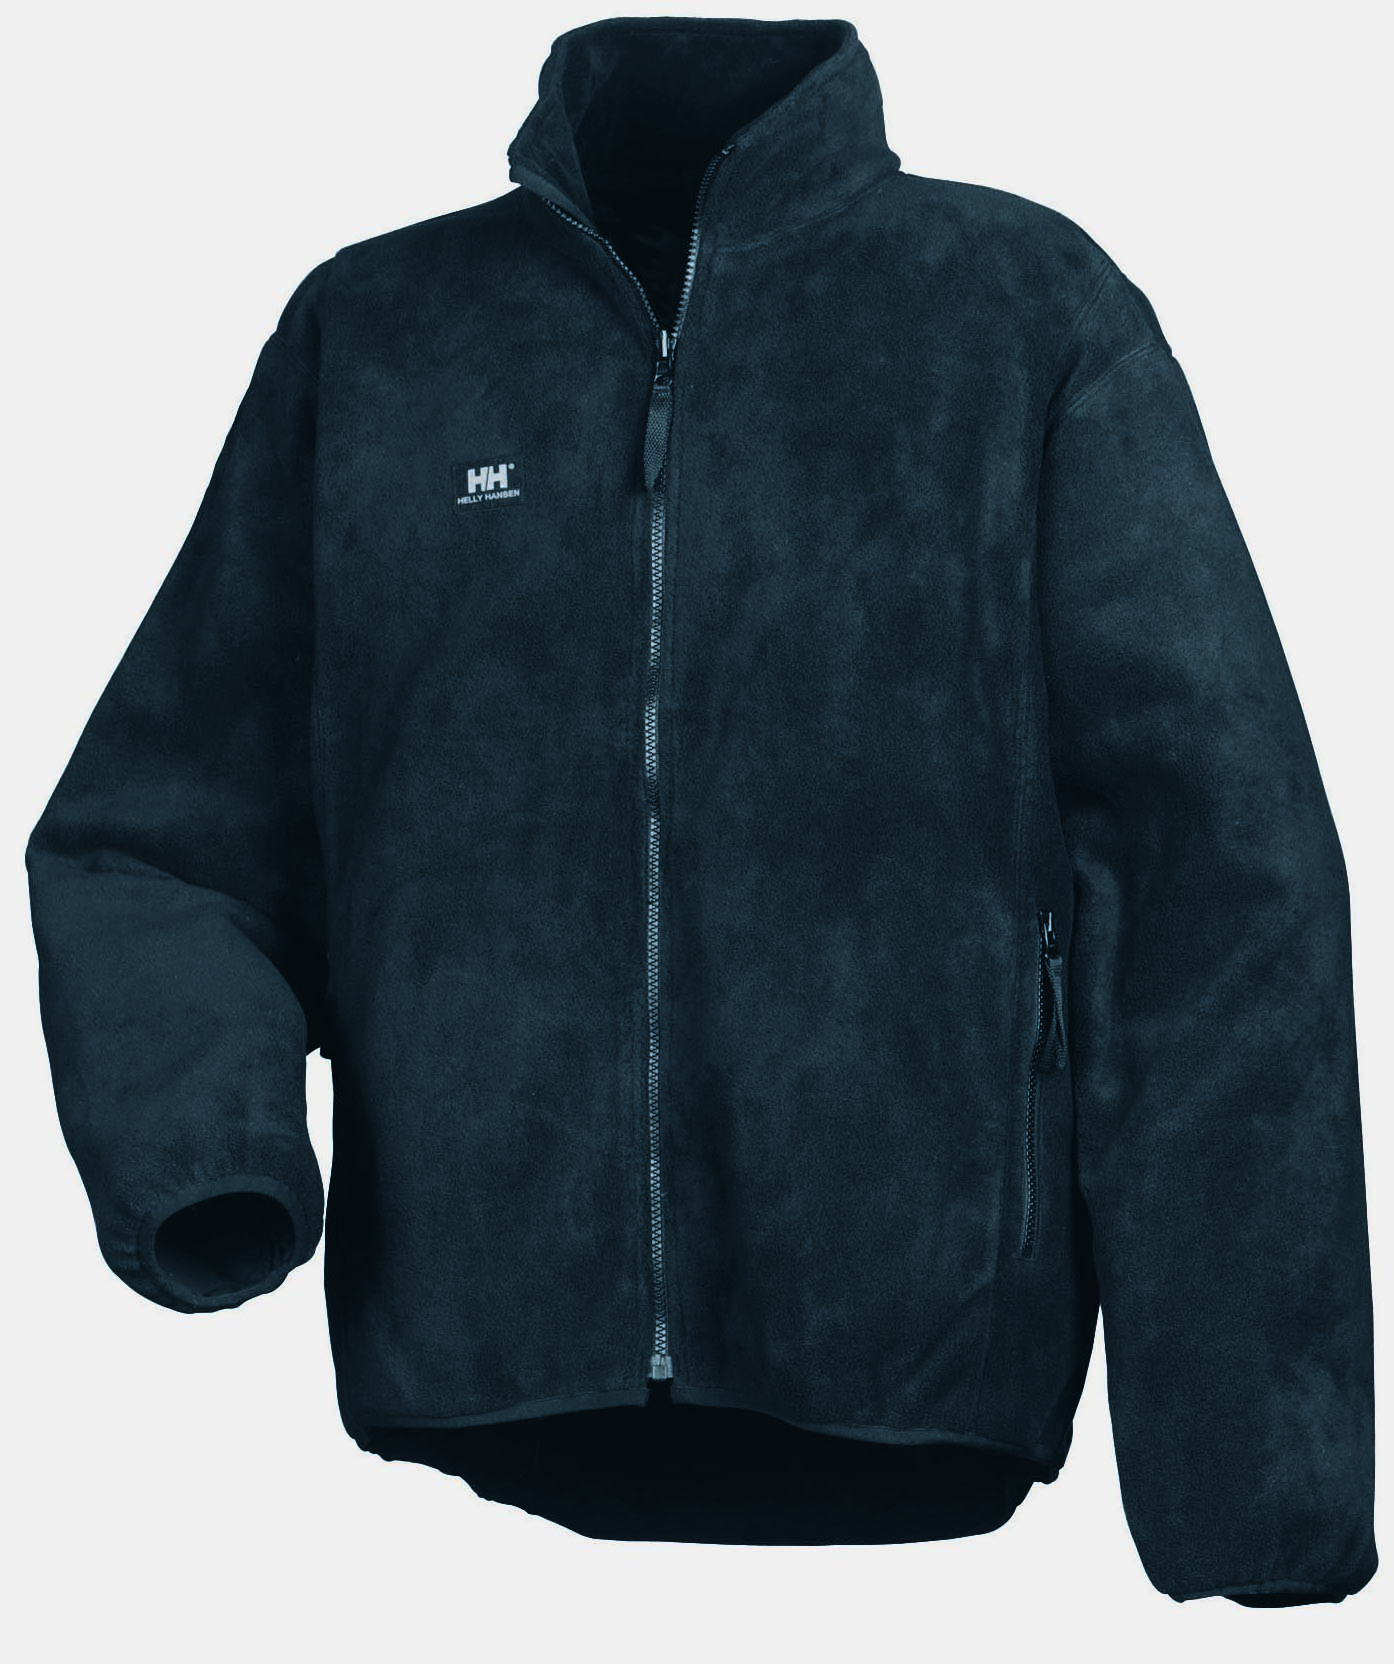 Manchester Zipin Fleece Jacket